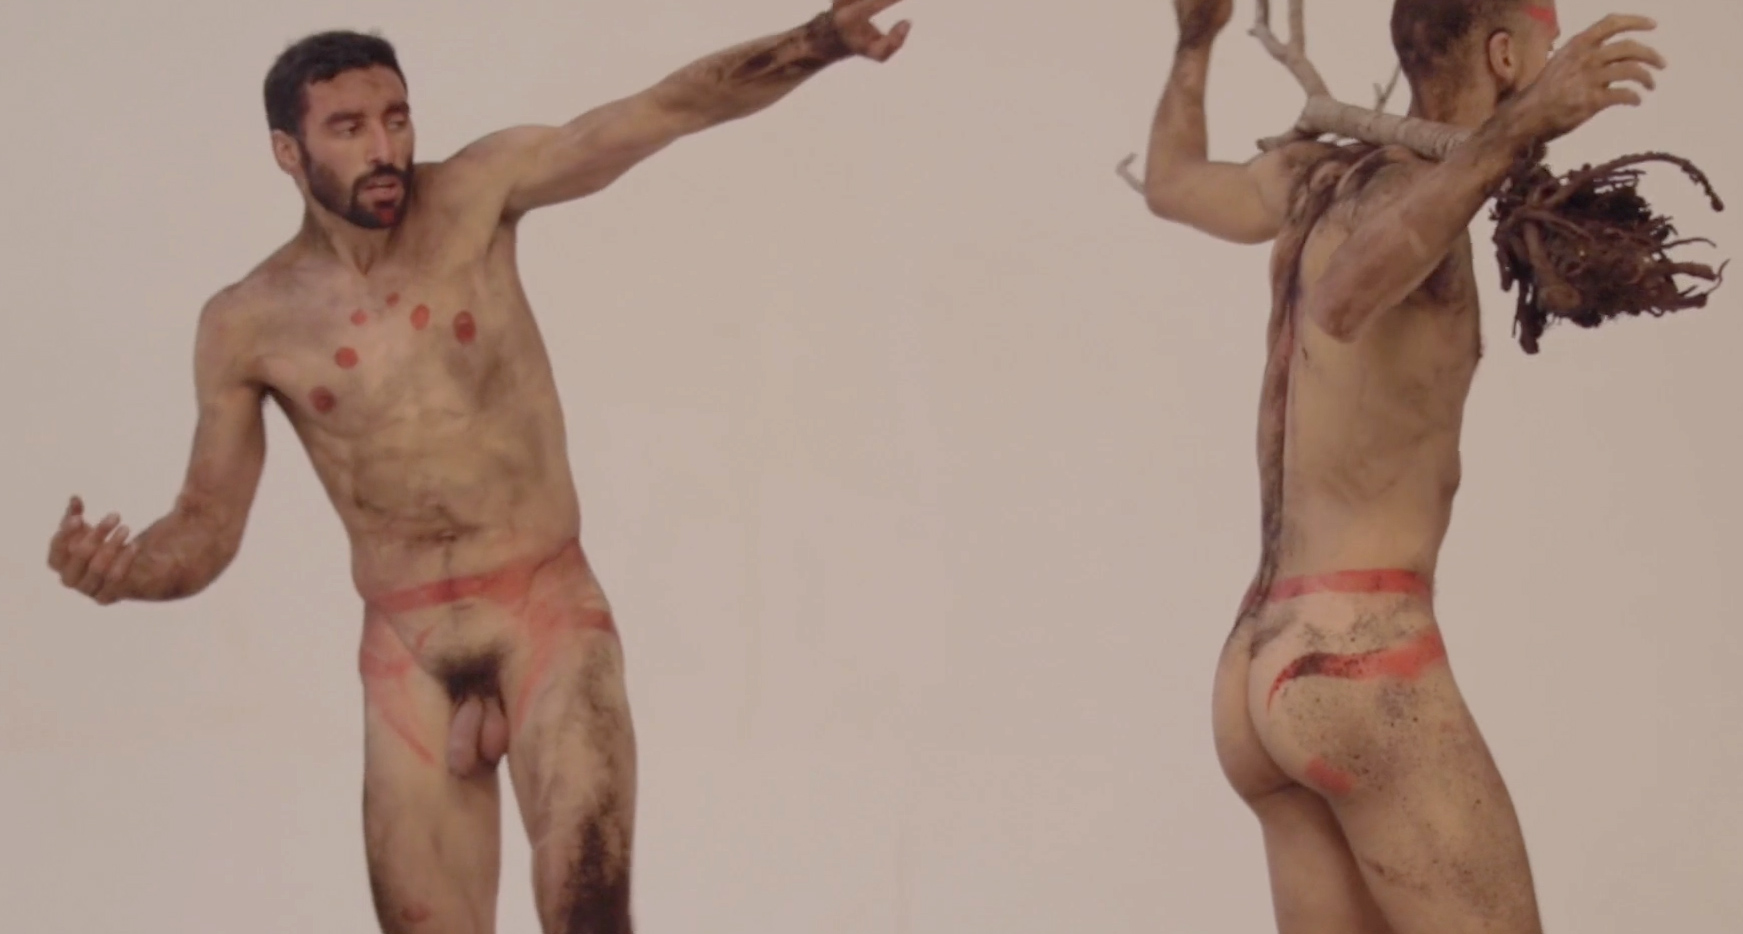 Male frontal nudity vimeo